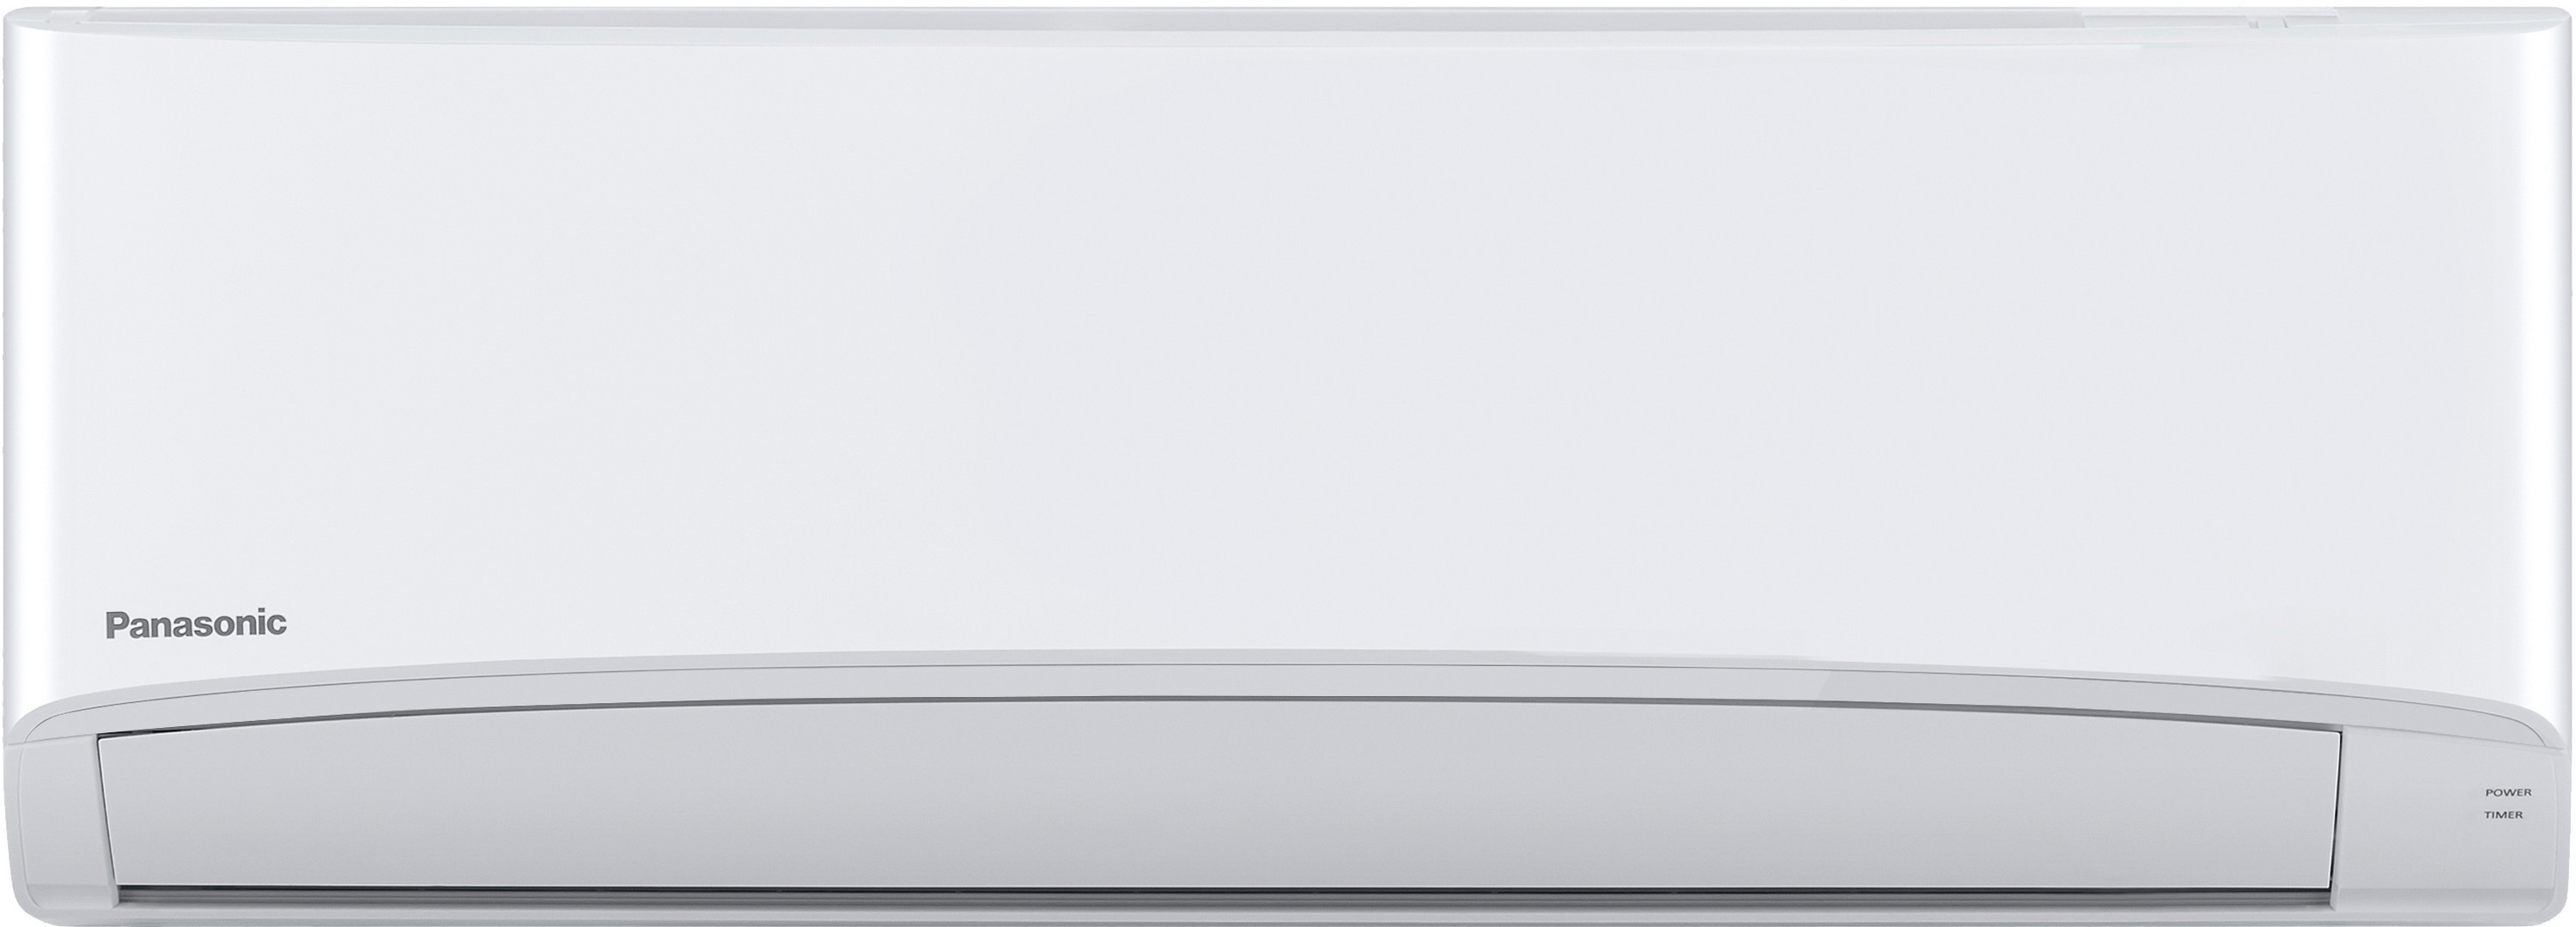 Кондиционер сплит-система Panasonic Compact Inverter CS/CU-TZ20TKEW-1 цена 30999.00 грн - фотография 2